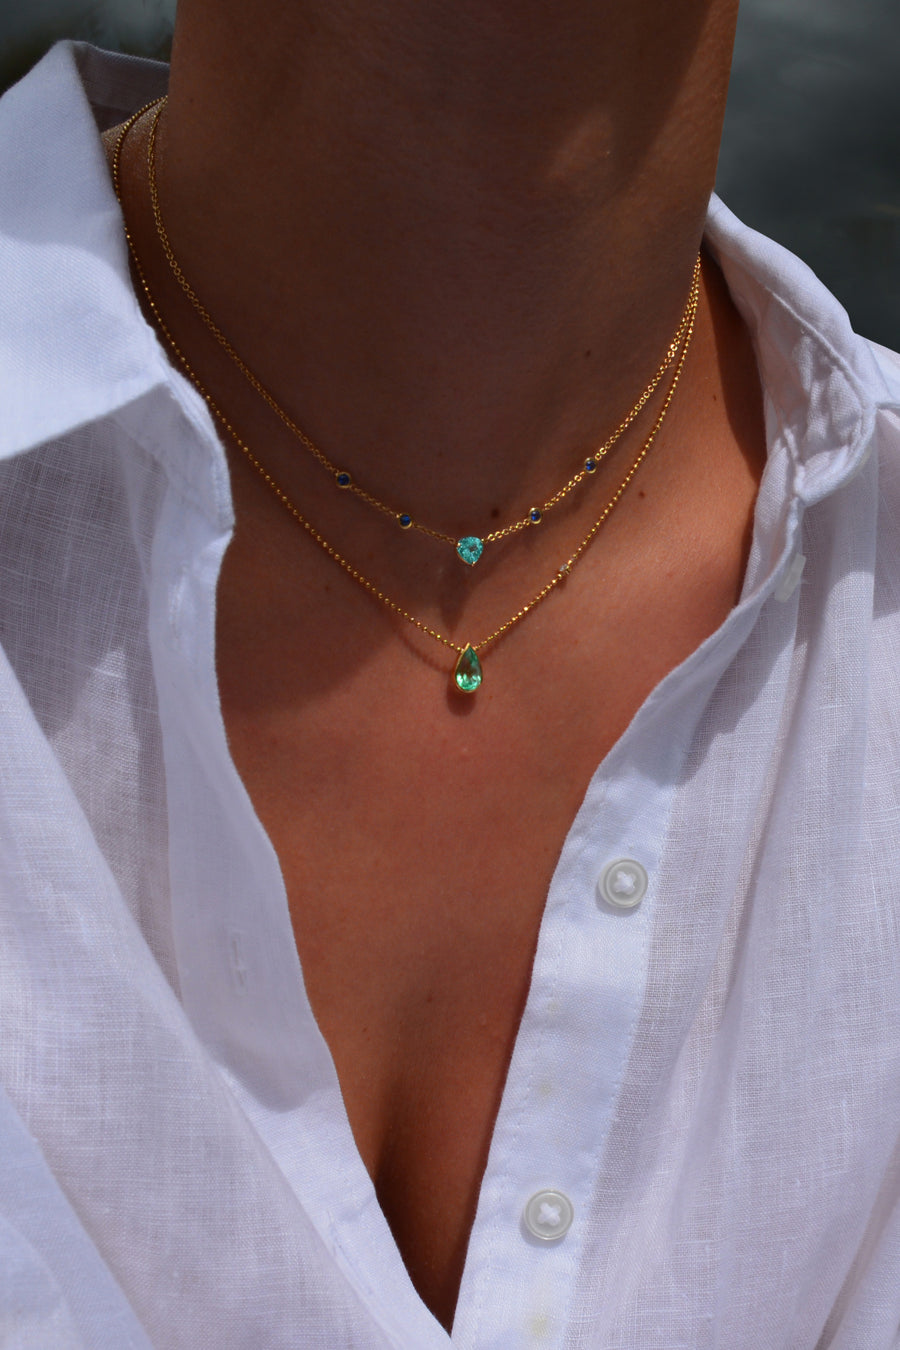 Paraiba Tourmaline and Sapphires Necklace